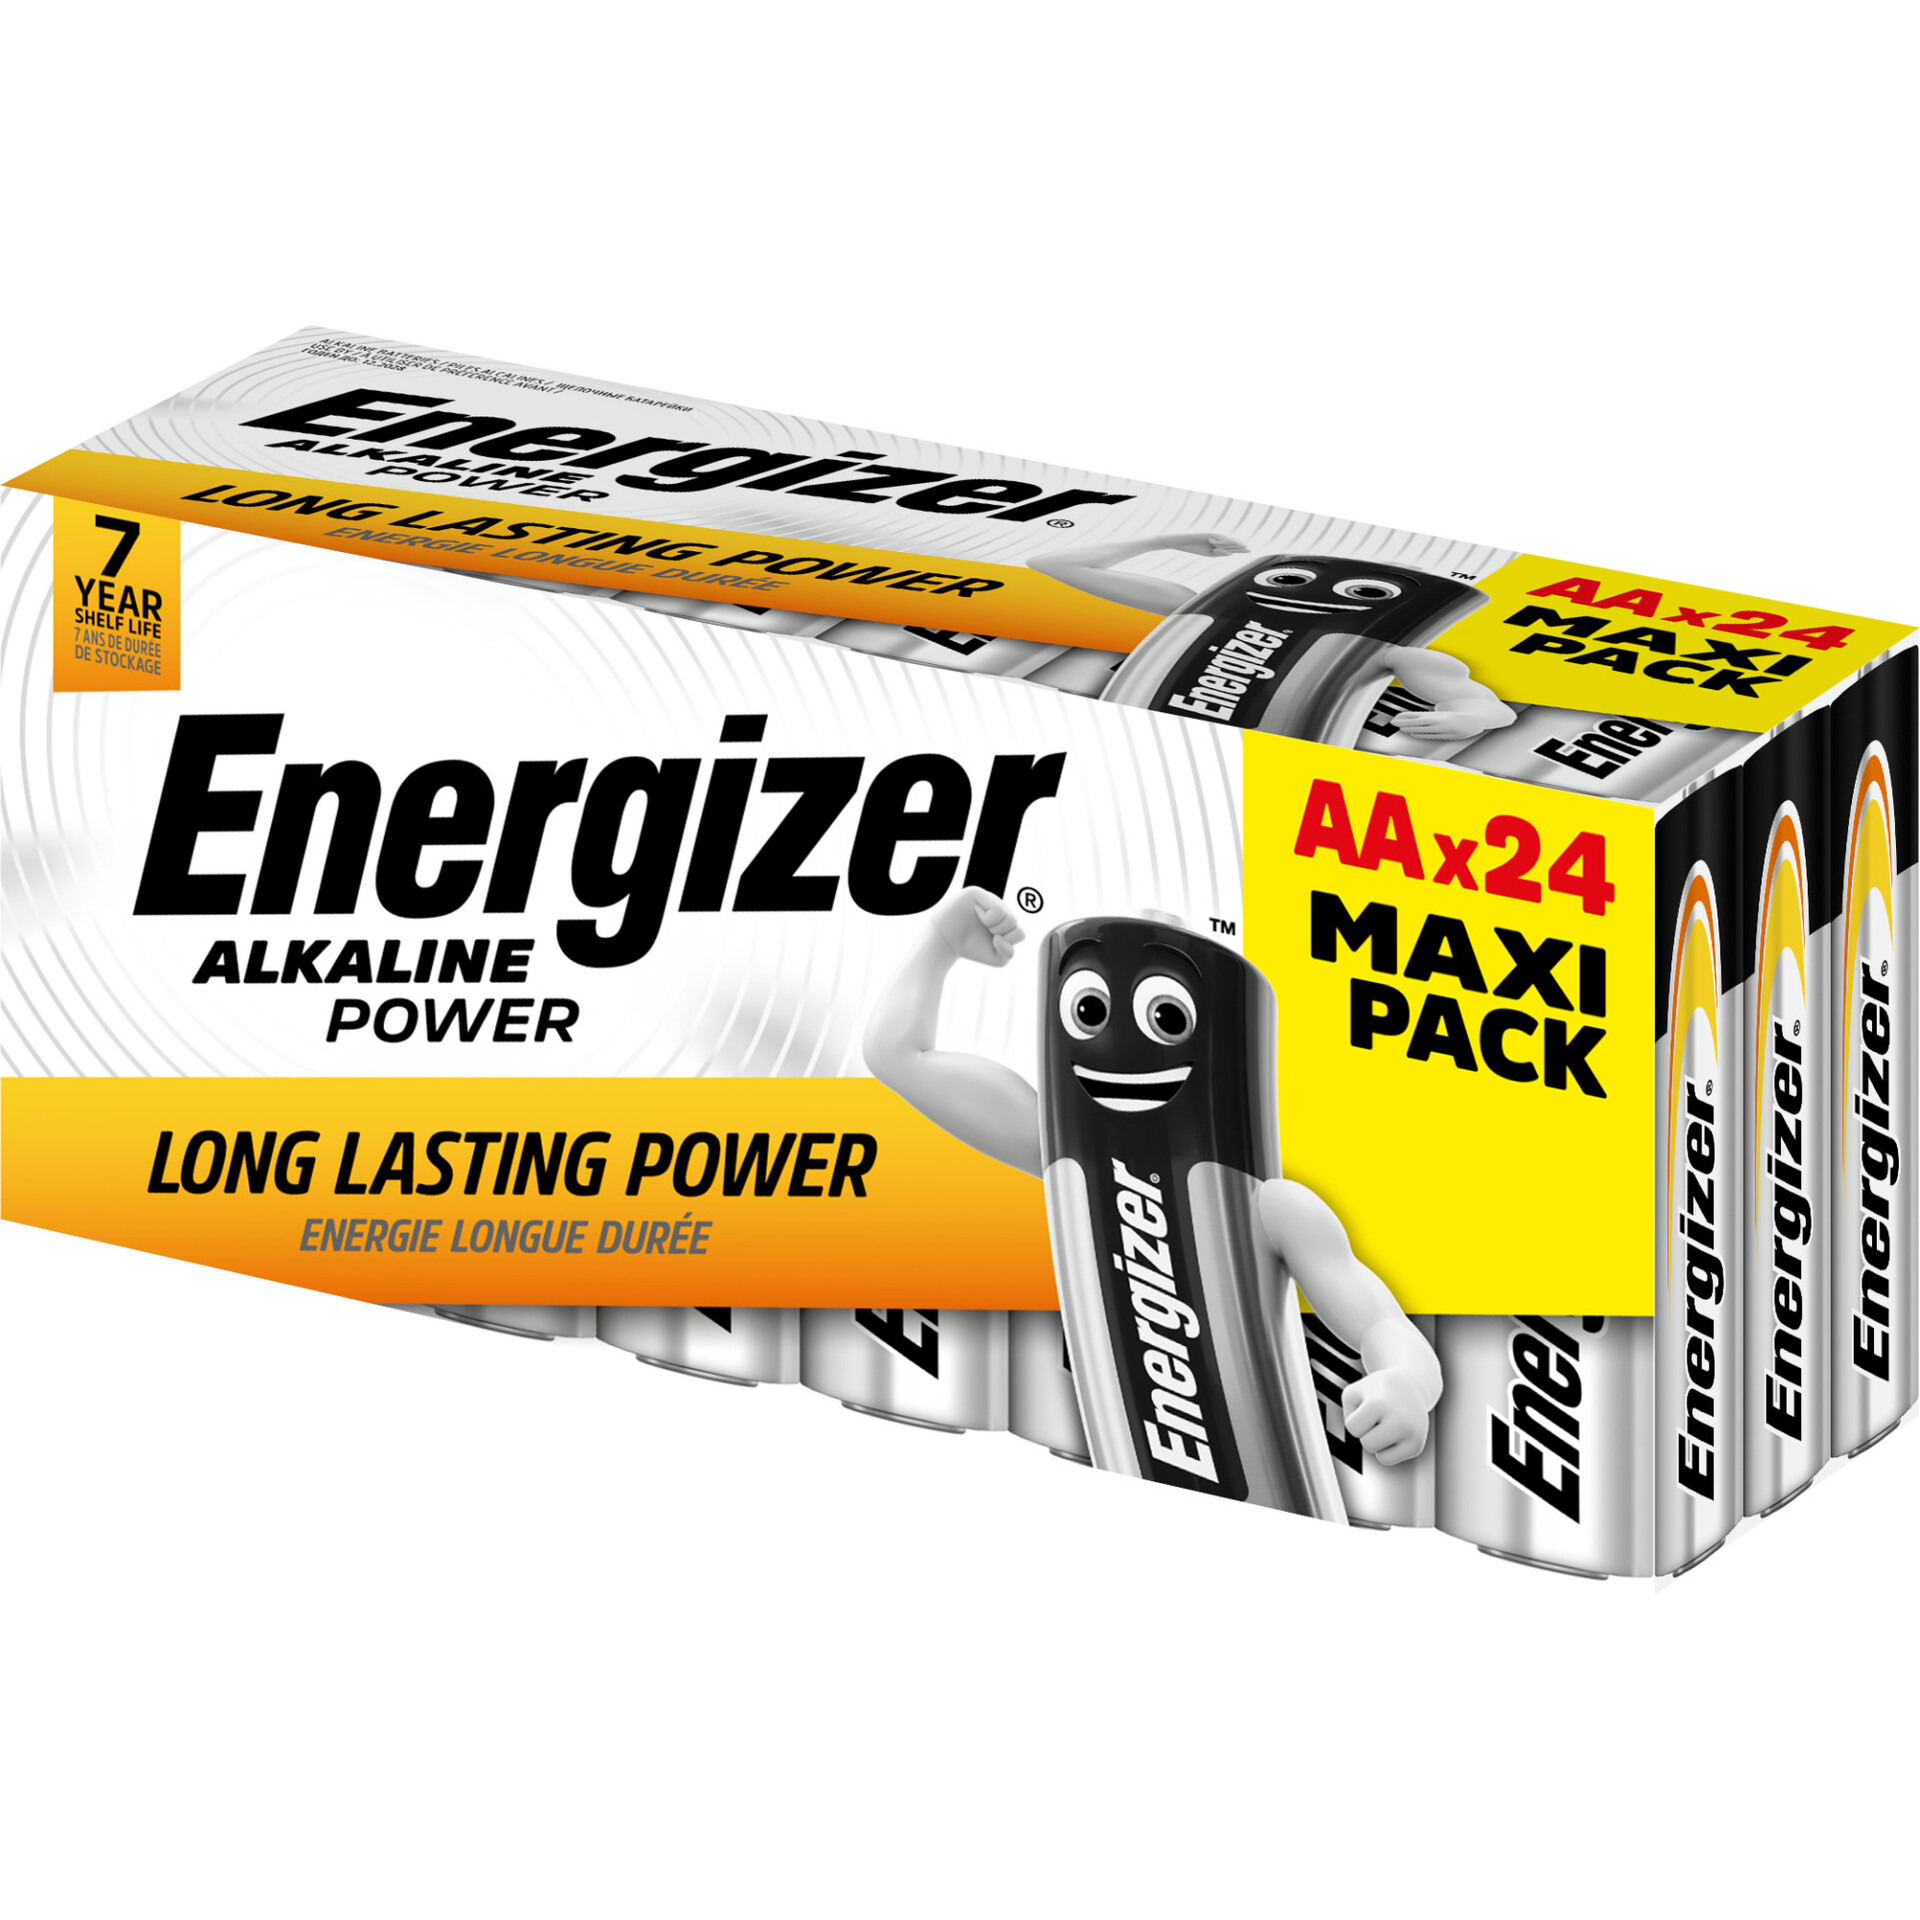 Energizer Alkaline Power AA-Batterien 24 Stück